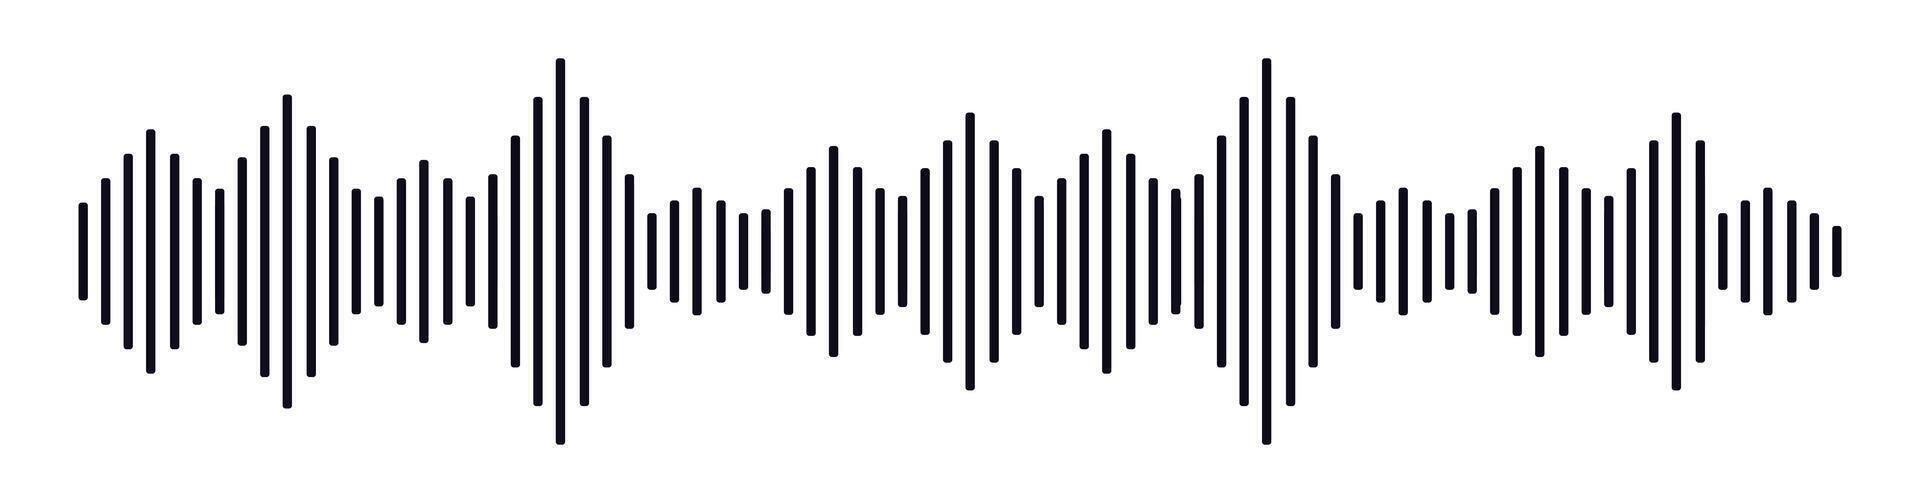 Klang Welle Stimme Botschaft Audio- vektor